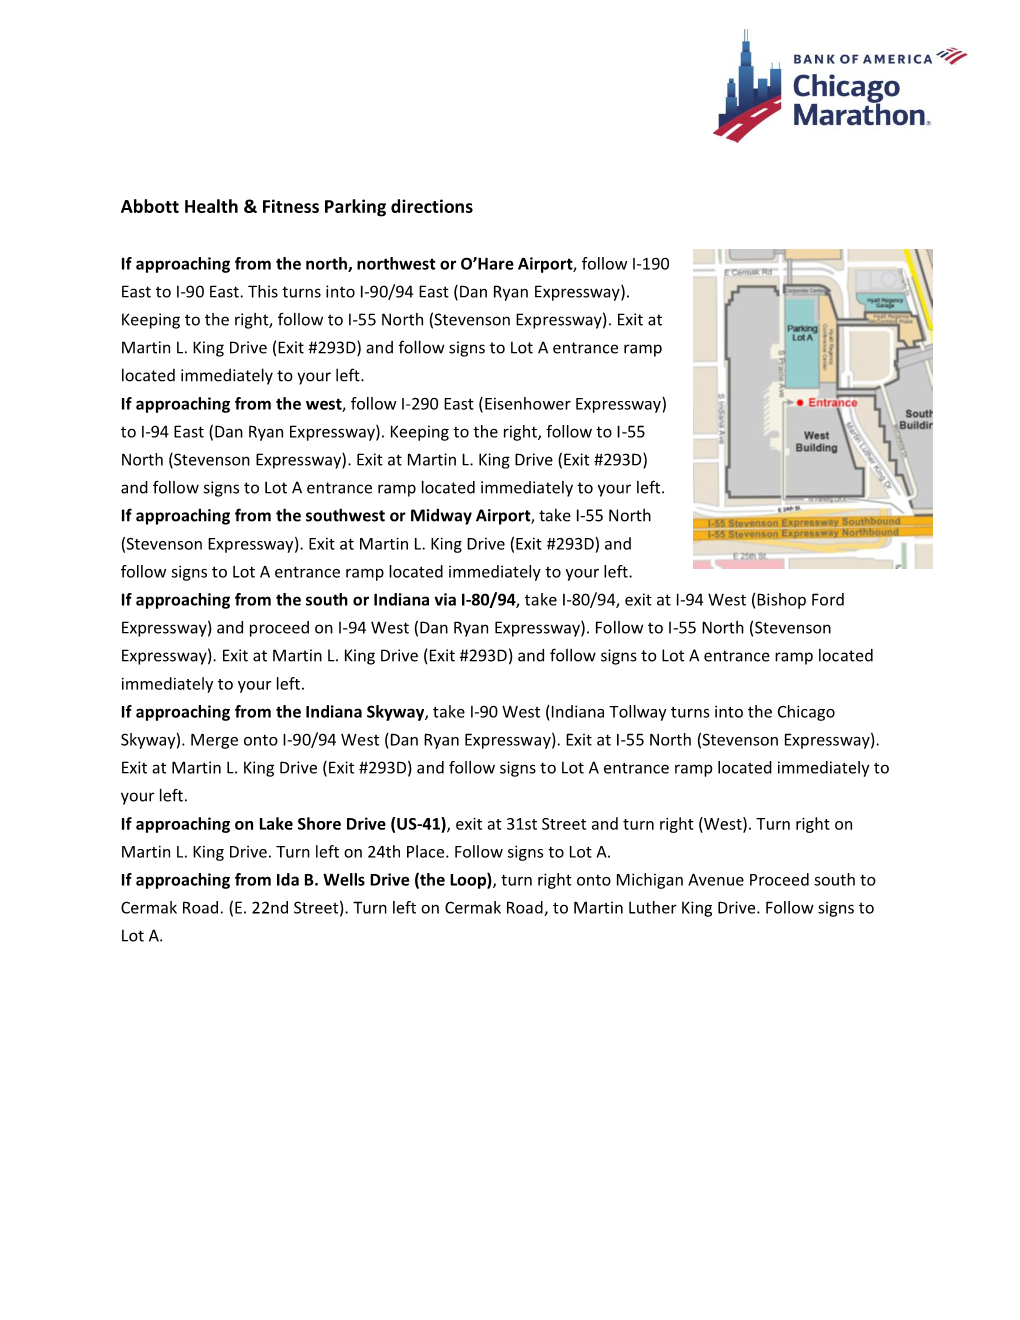 Abbott Health & Fitness Parking Directions